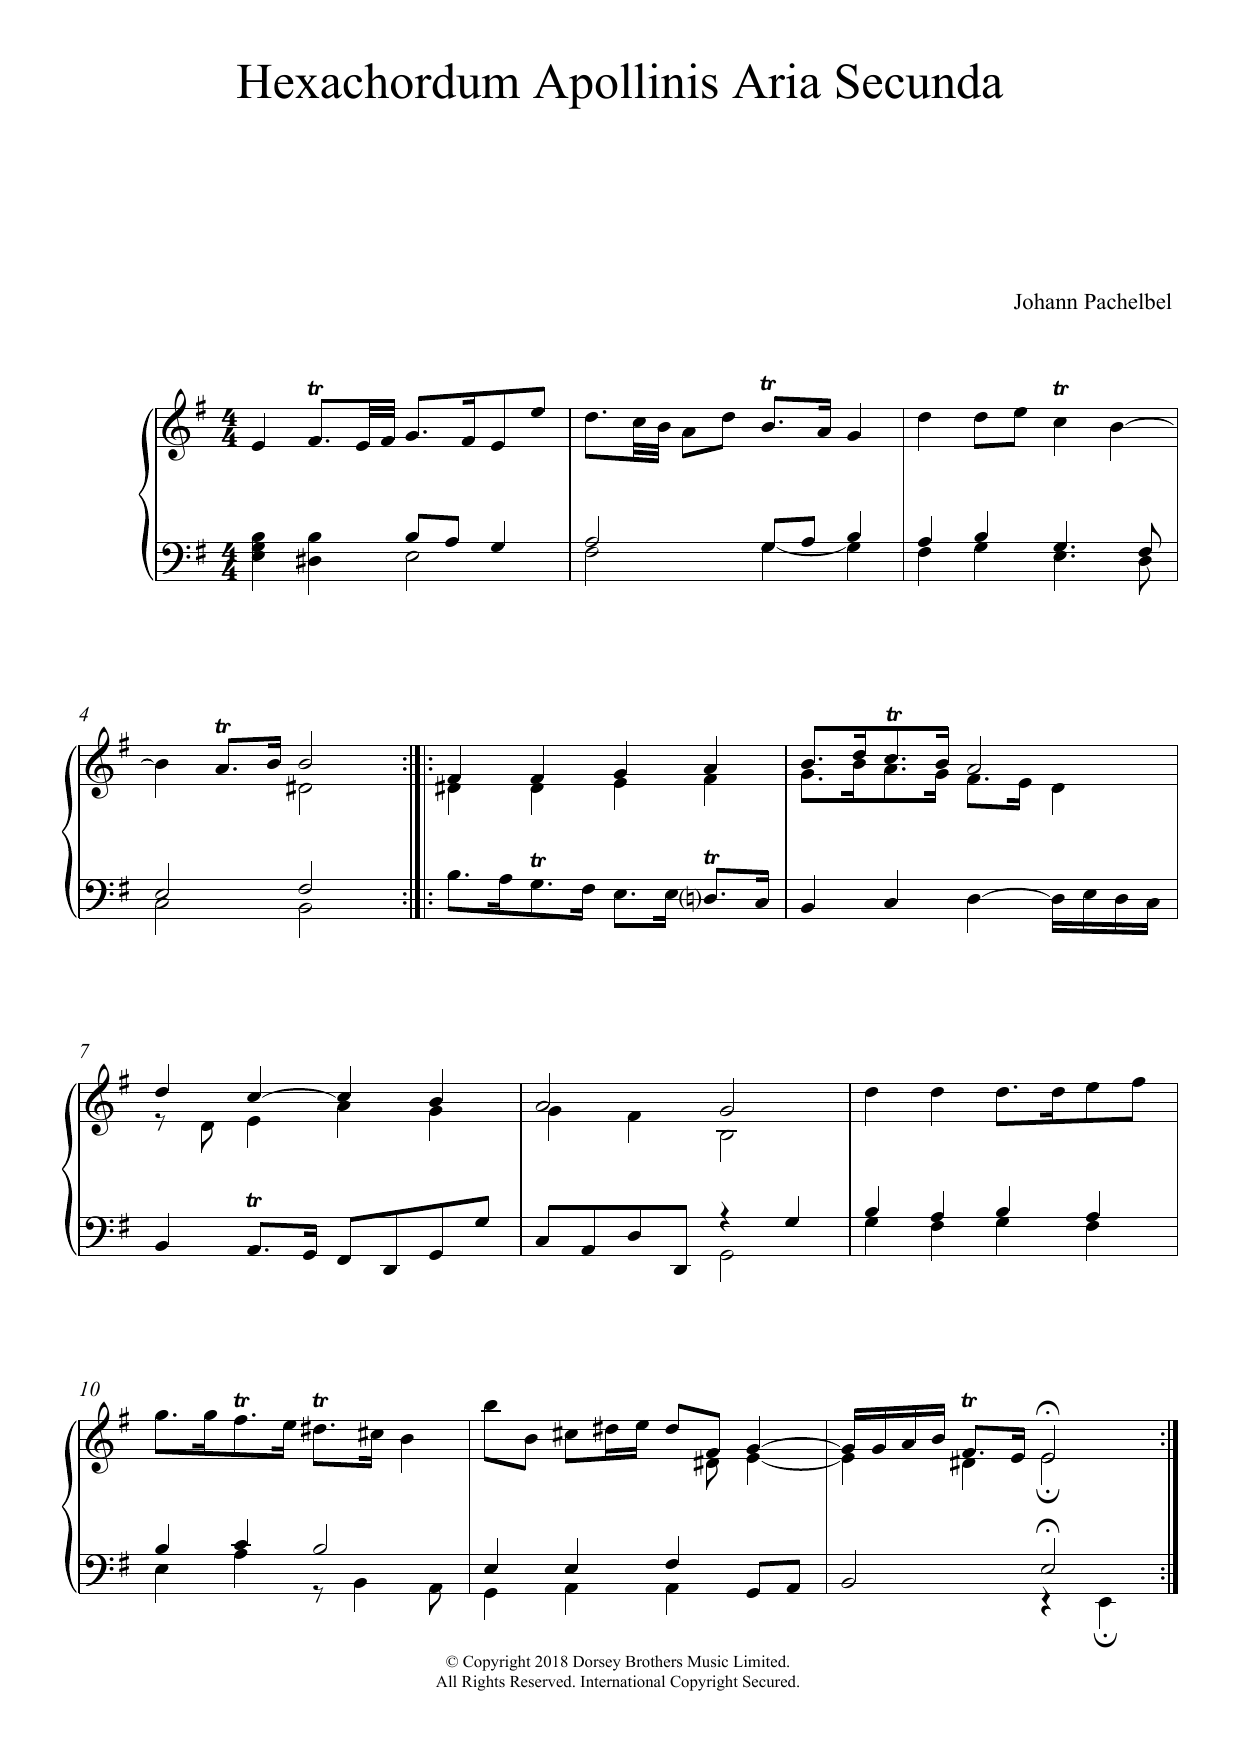 Johann Pachelbel Hexachordum Apollinis: Aria Secunda Sheet Music Notes & Chords for Piano - Download or Print PDF